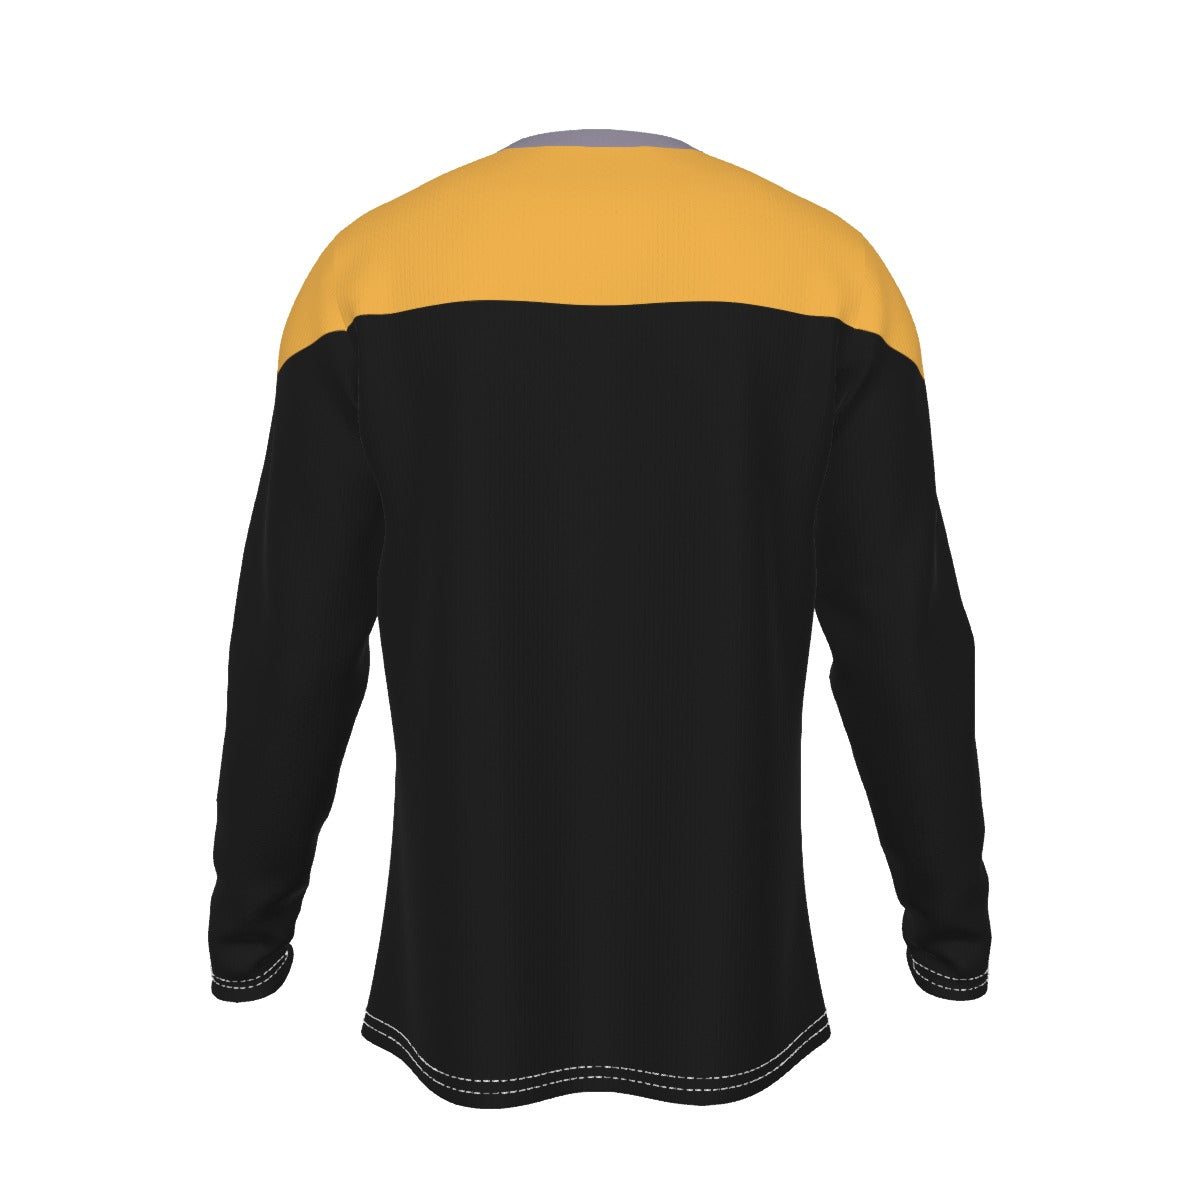 Voyager / DS9 Gold Uniform Shirt - No Badge - Yellow / Gold